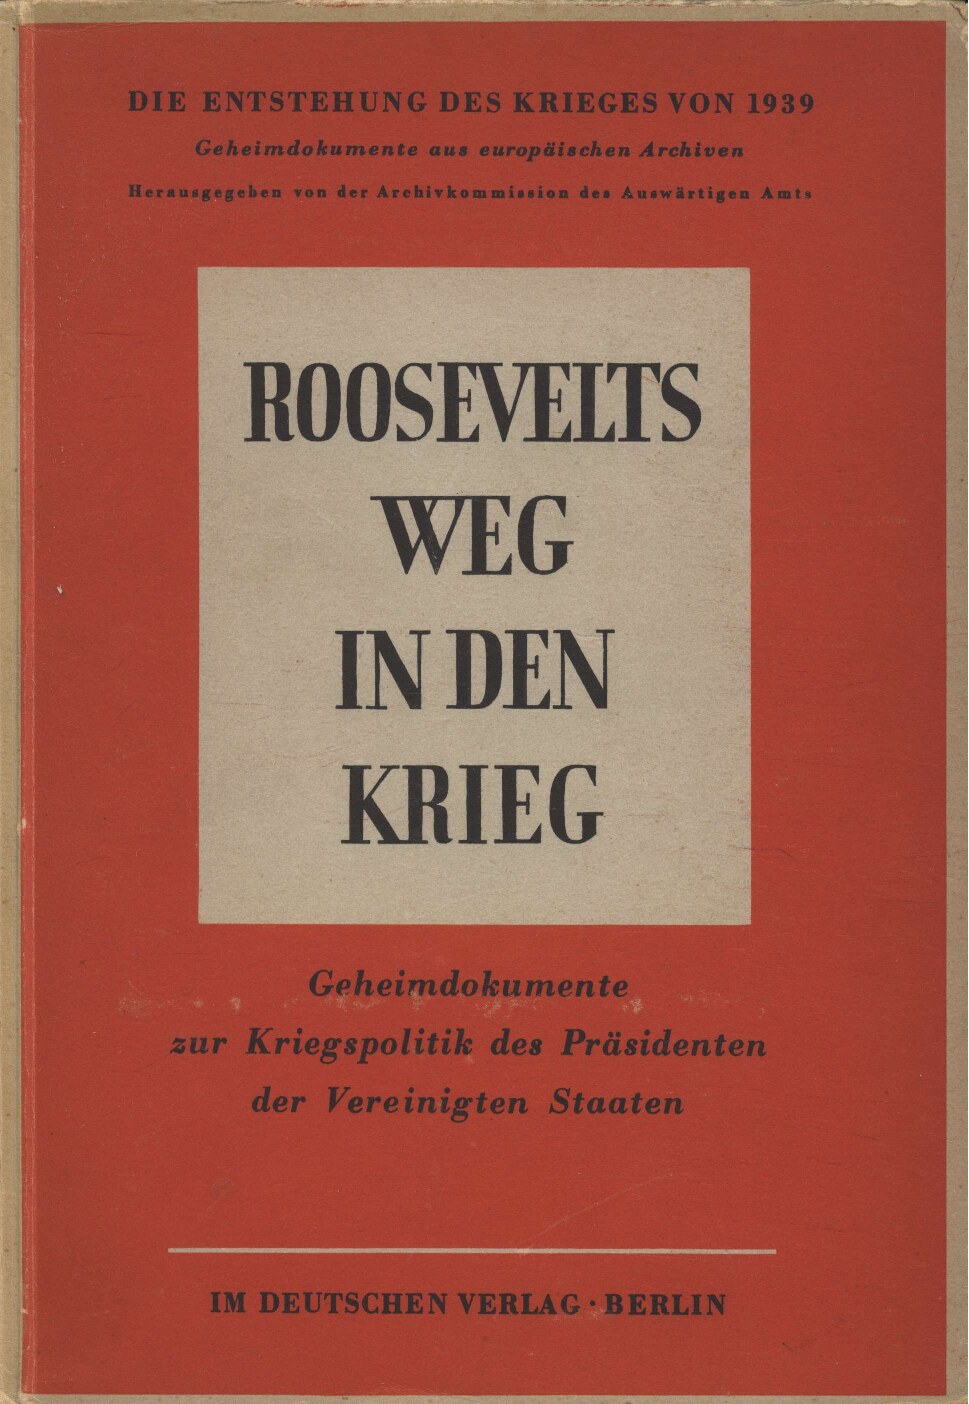 Roosevelts Weg in den Krieg (1943, 116 S., Scan)